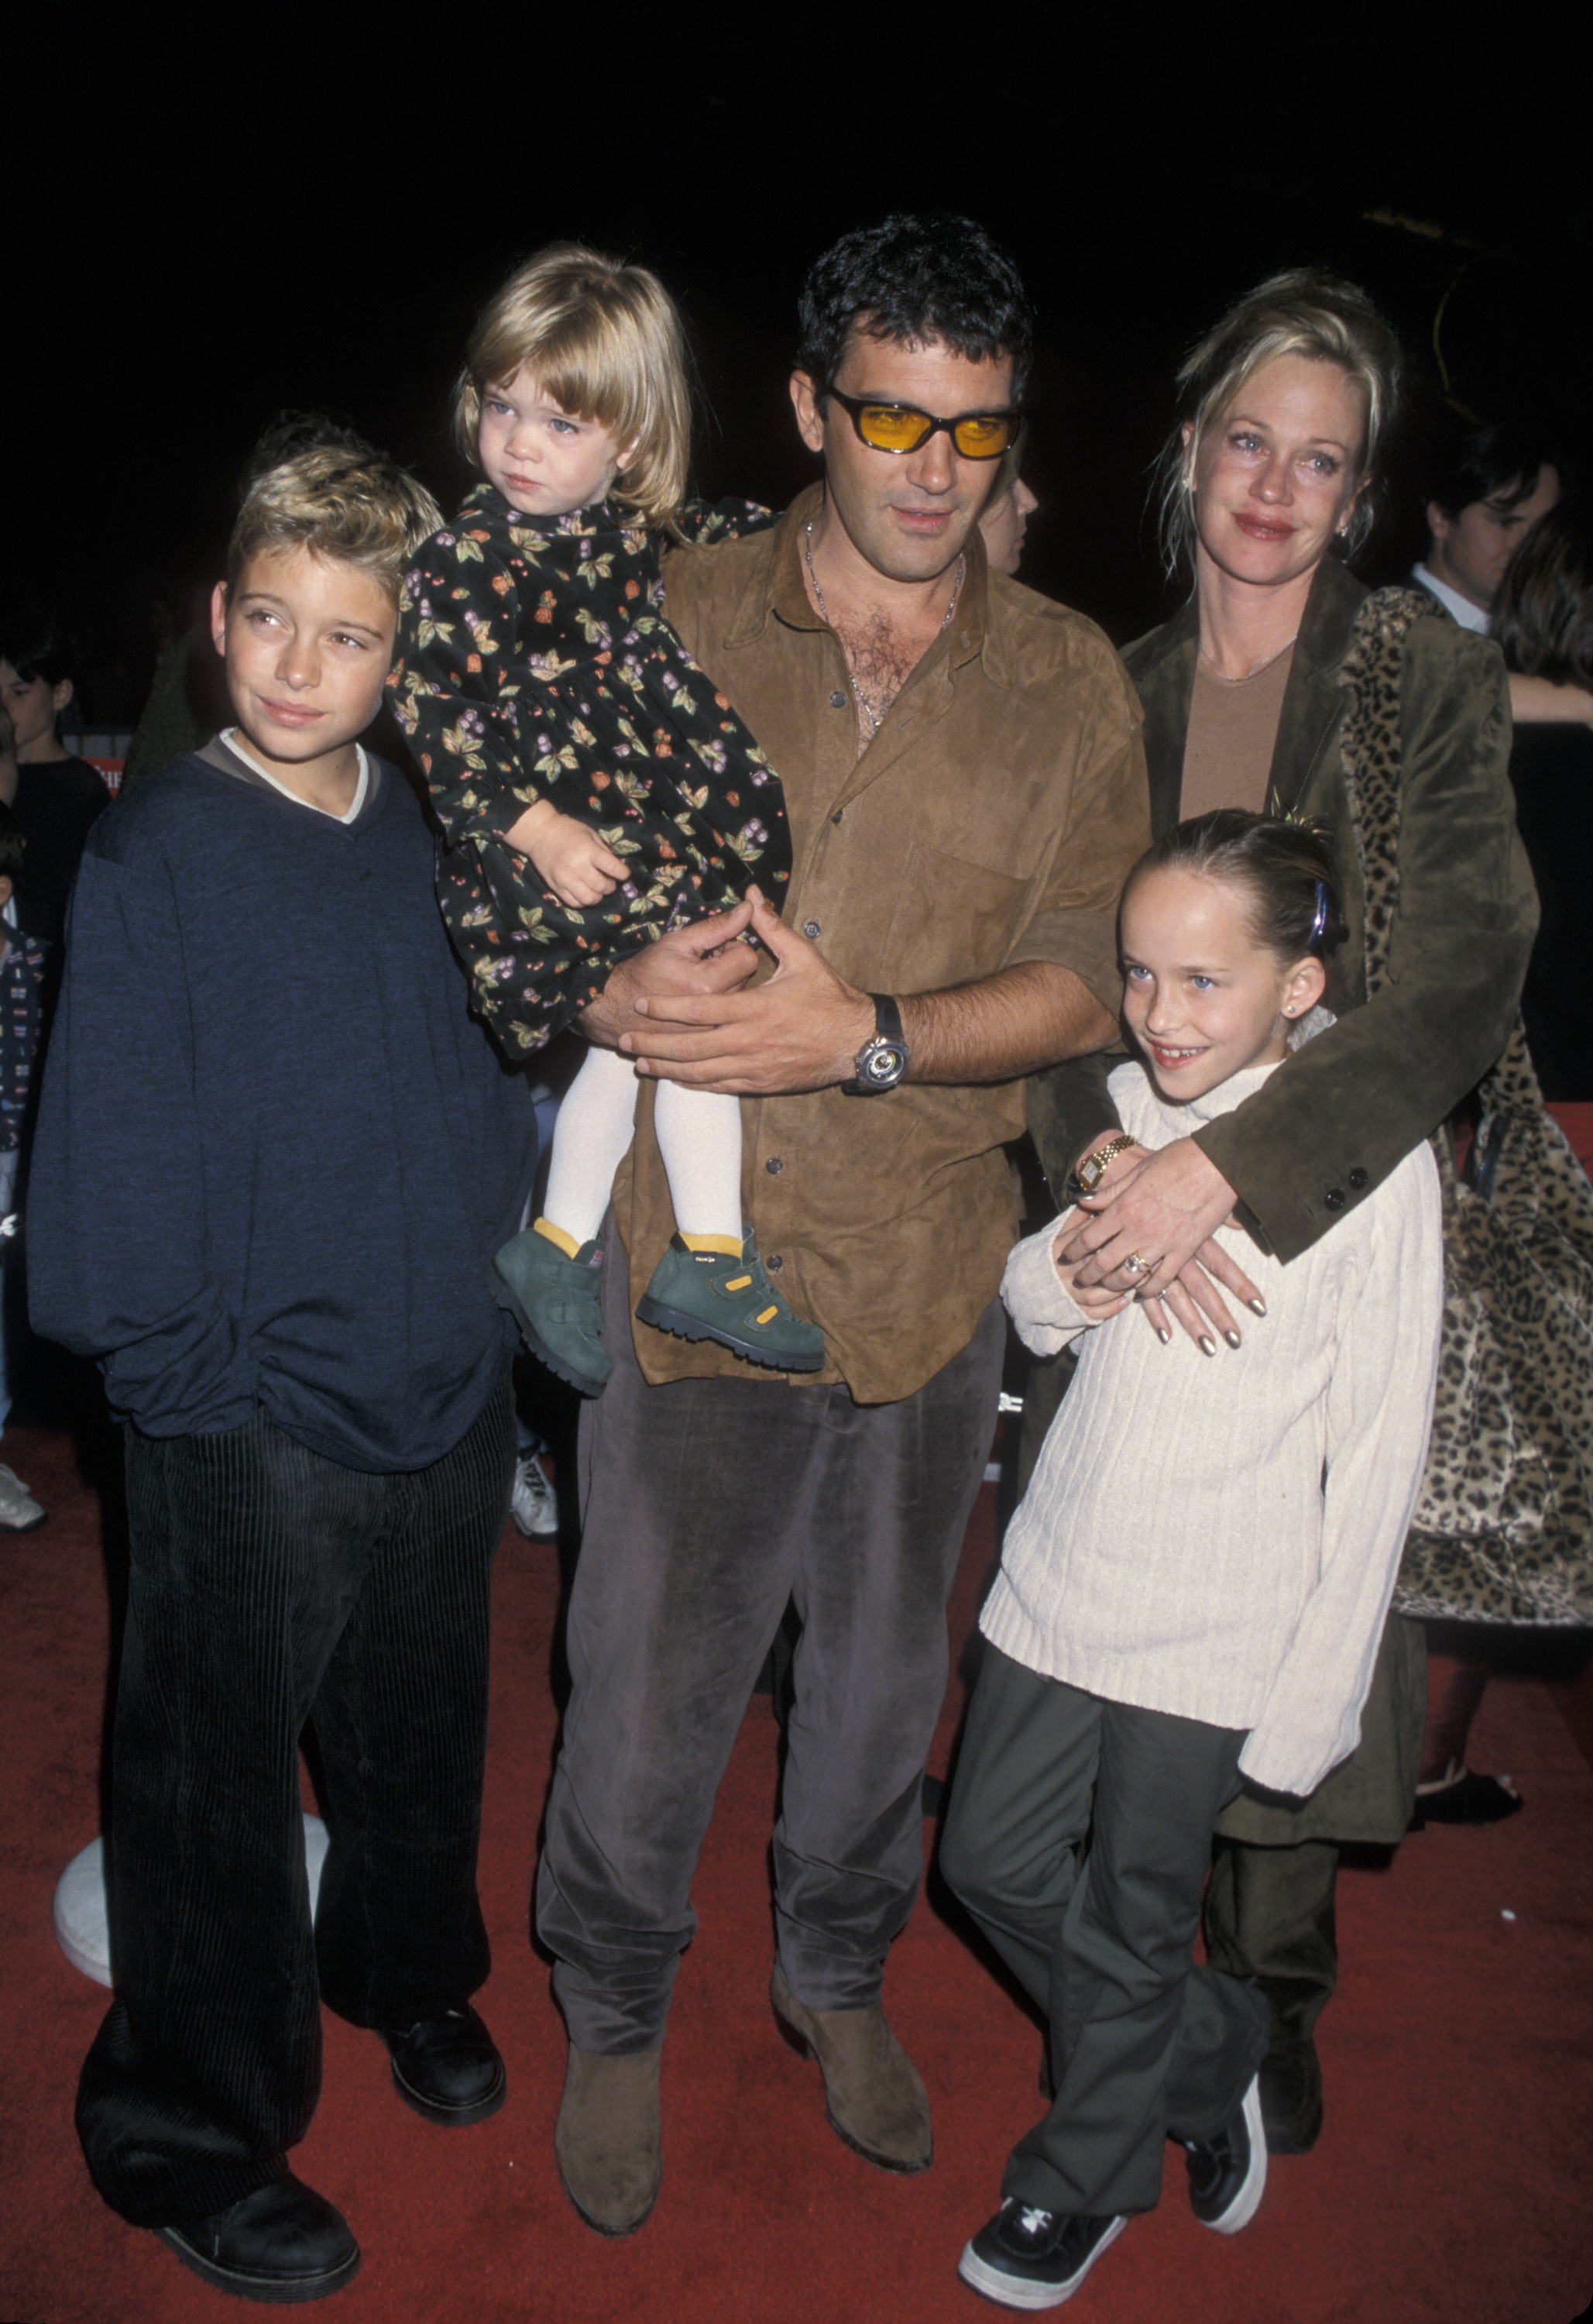 Antonio Banderas and Melanie Griffith with their children Alexander Bauer, Stella Banderas, and Dakota Johnson in Los Angeles in 1998 | Source: Getty Images